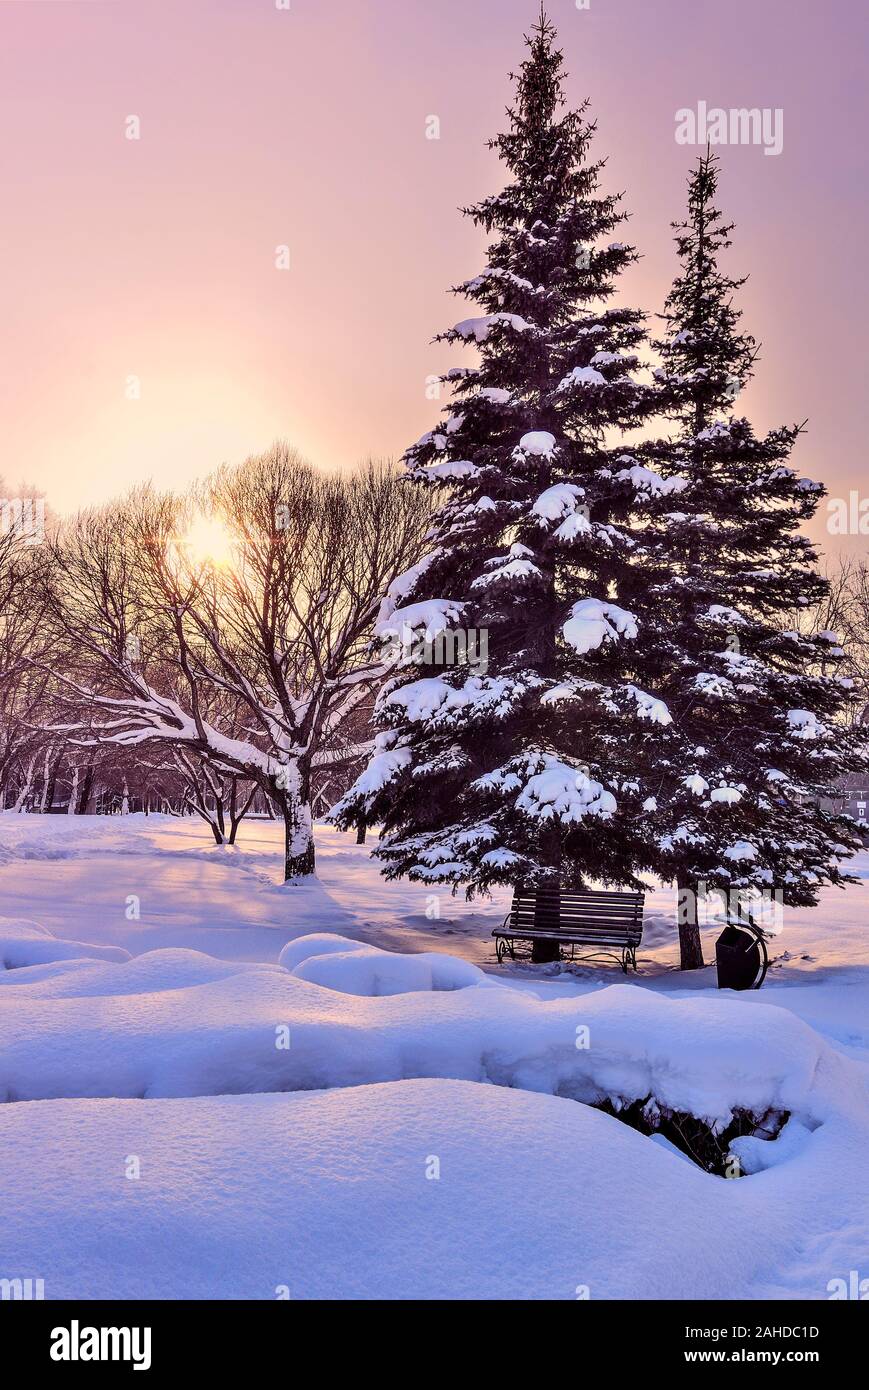 PHOTO LANDSCAPE WINTER SNOW FOGGY SUNRISE TREE BENCH ART PRINT POSTER MP3948B